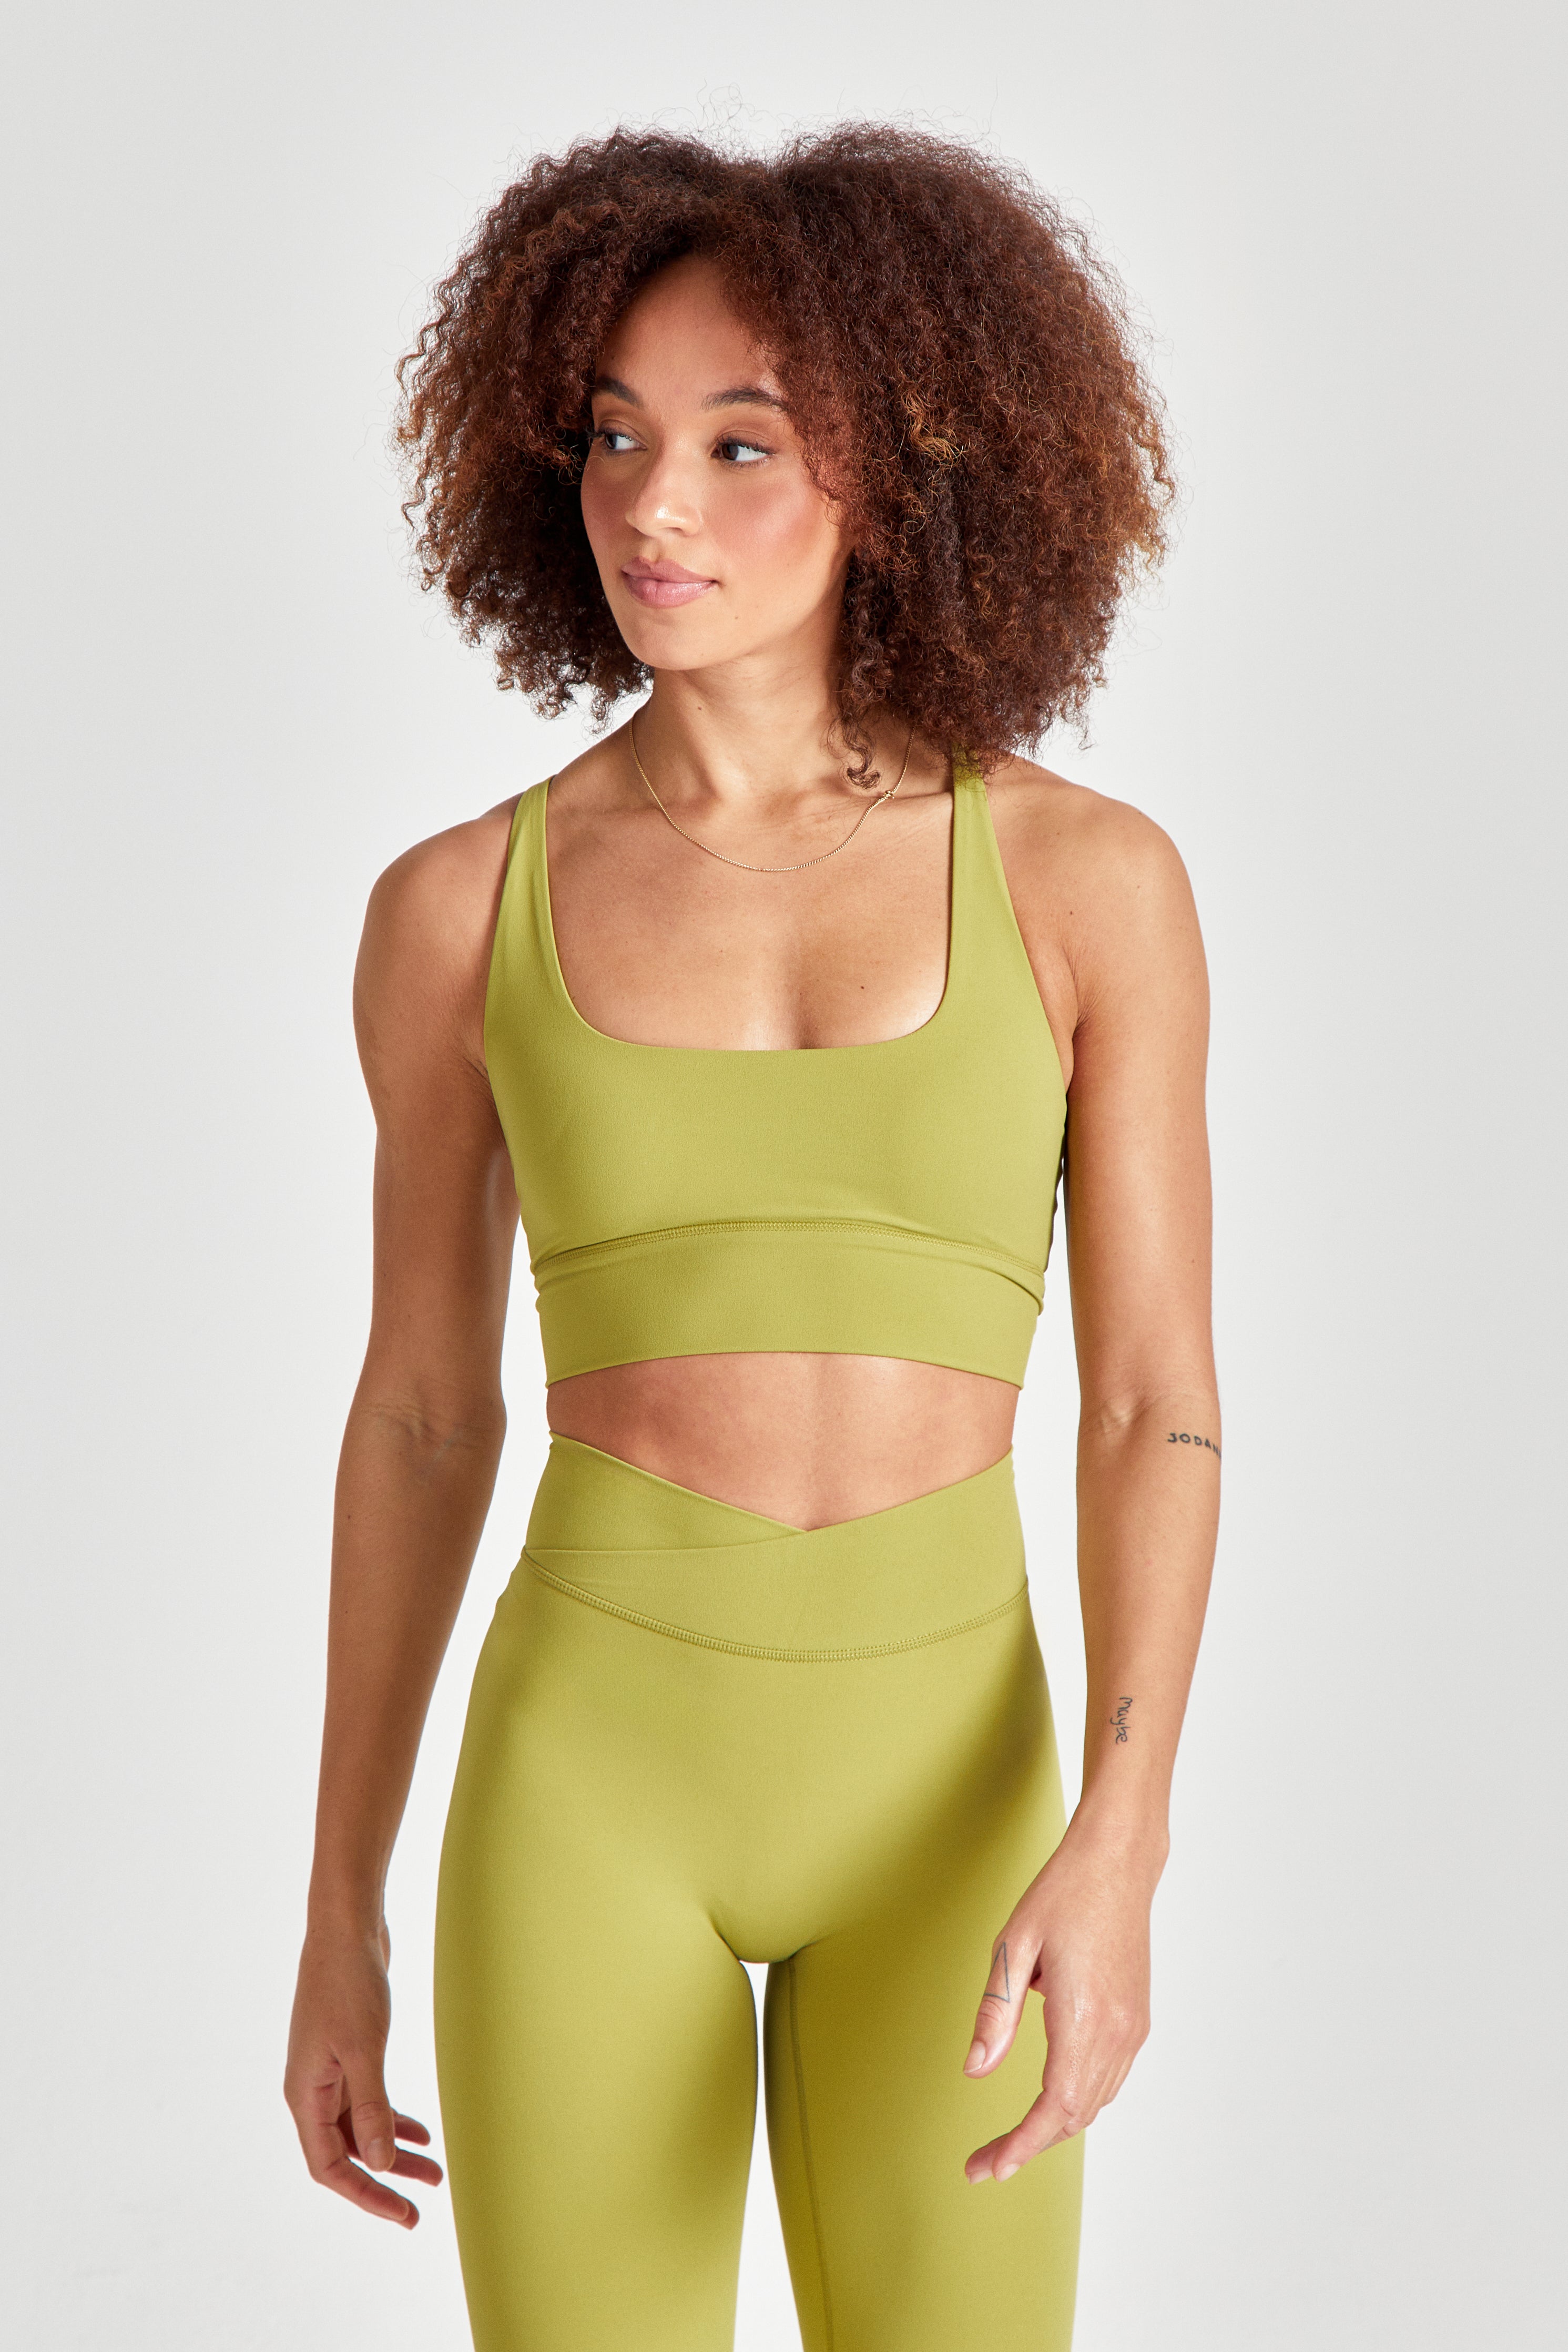 Entyinea Full Figure Bras for Women Spaghetti Strap Cotton Pullover Sports  Bra Orange XL